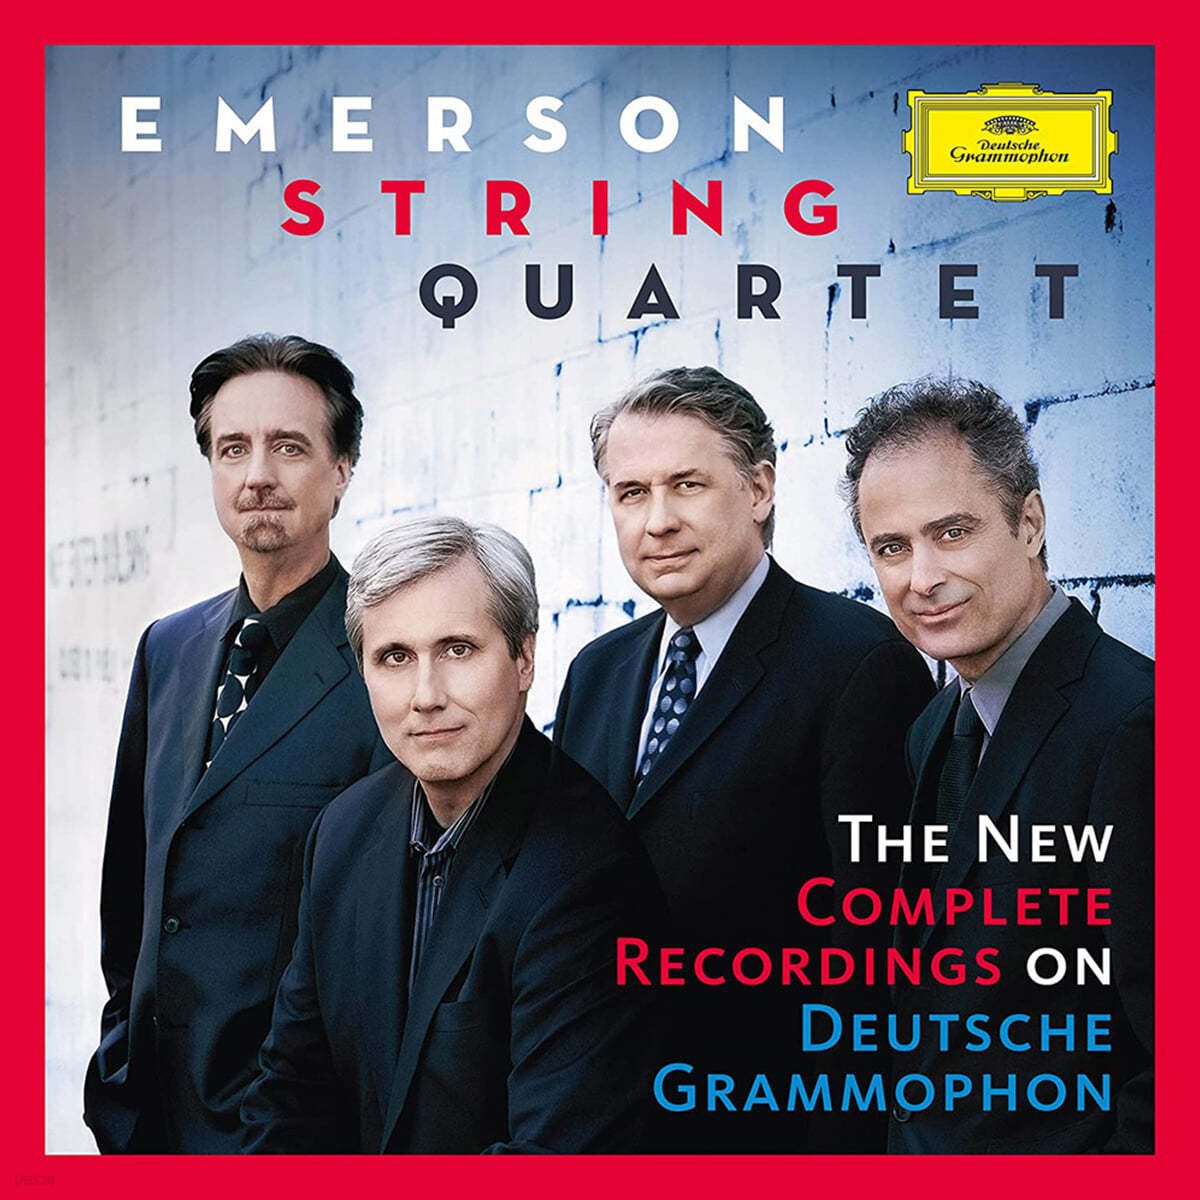 Emerson String Quartet 에머슨 현악 사중주단의 새로운 DG 전집 (The New Complete Recordings On Deutsche Grammophon)